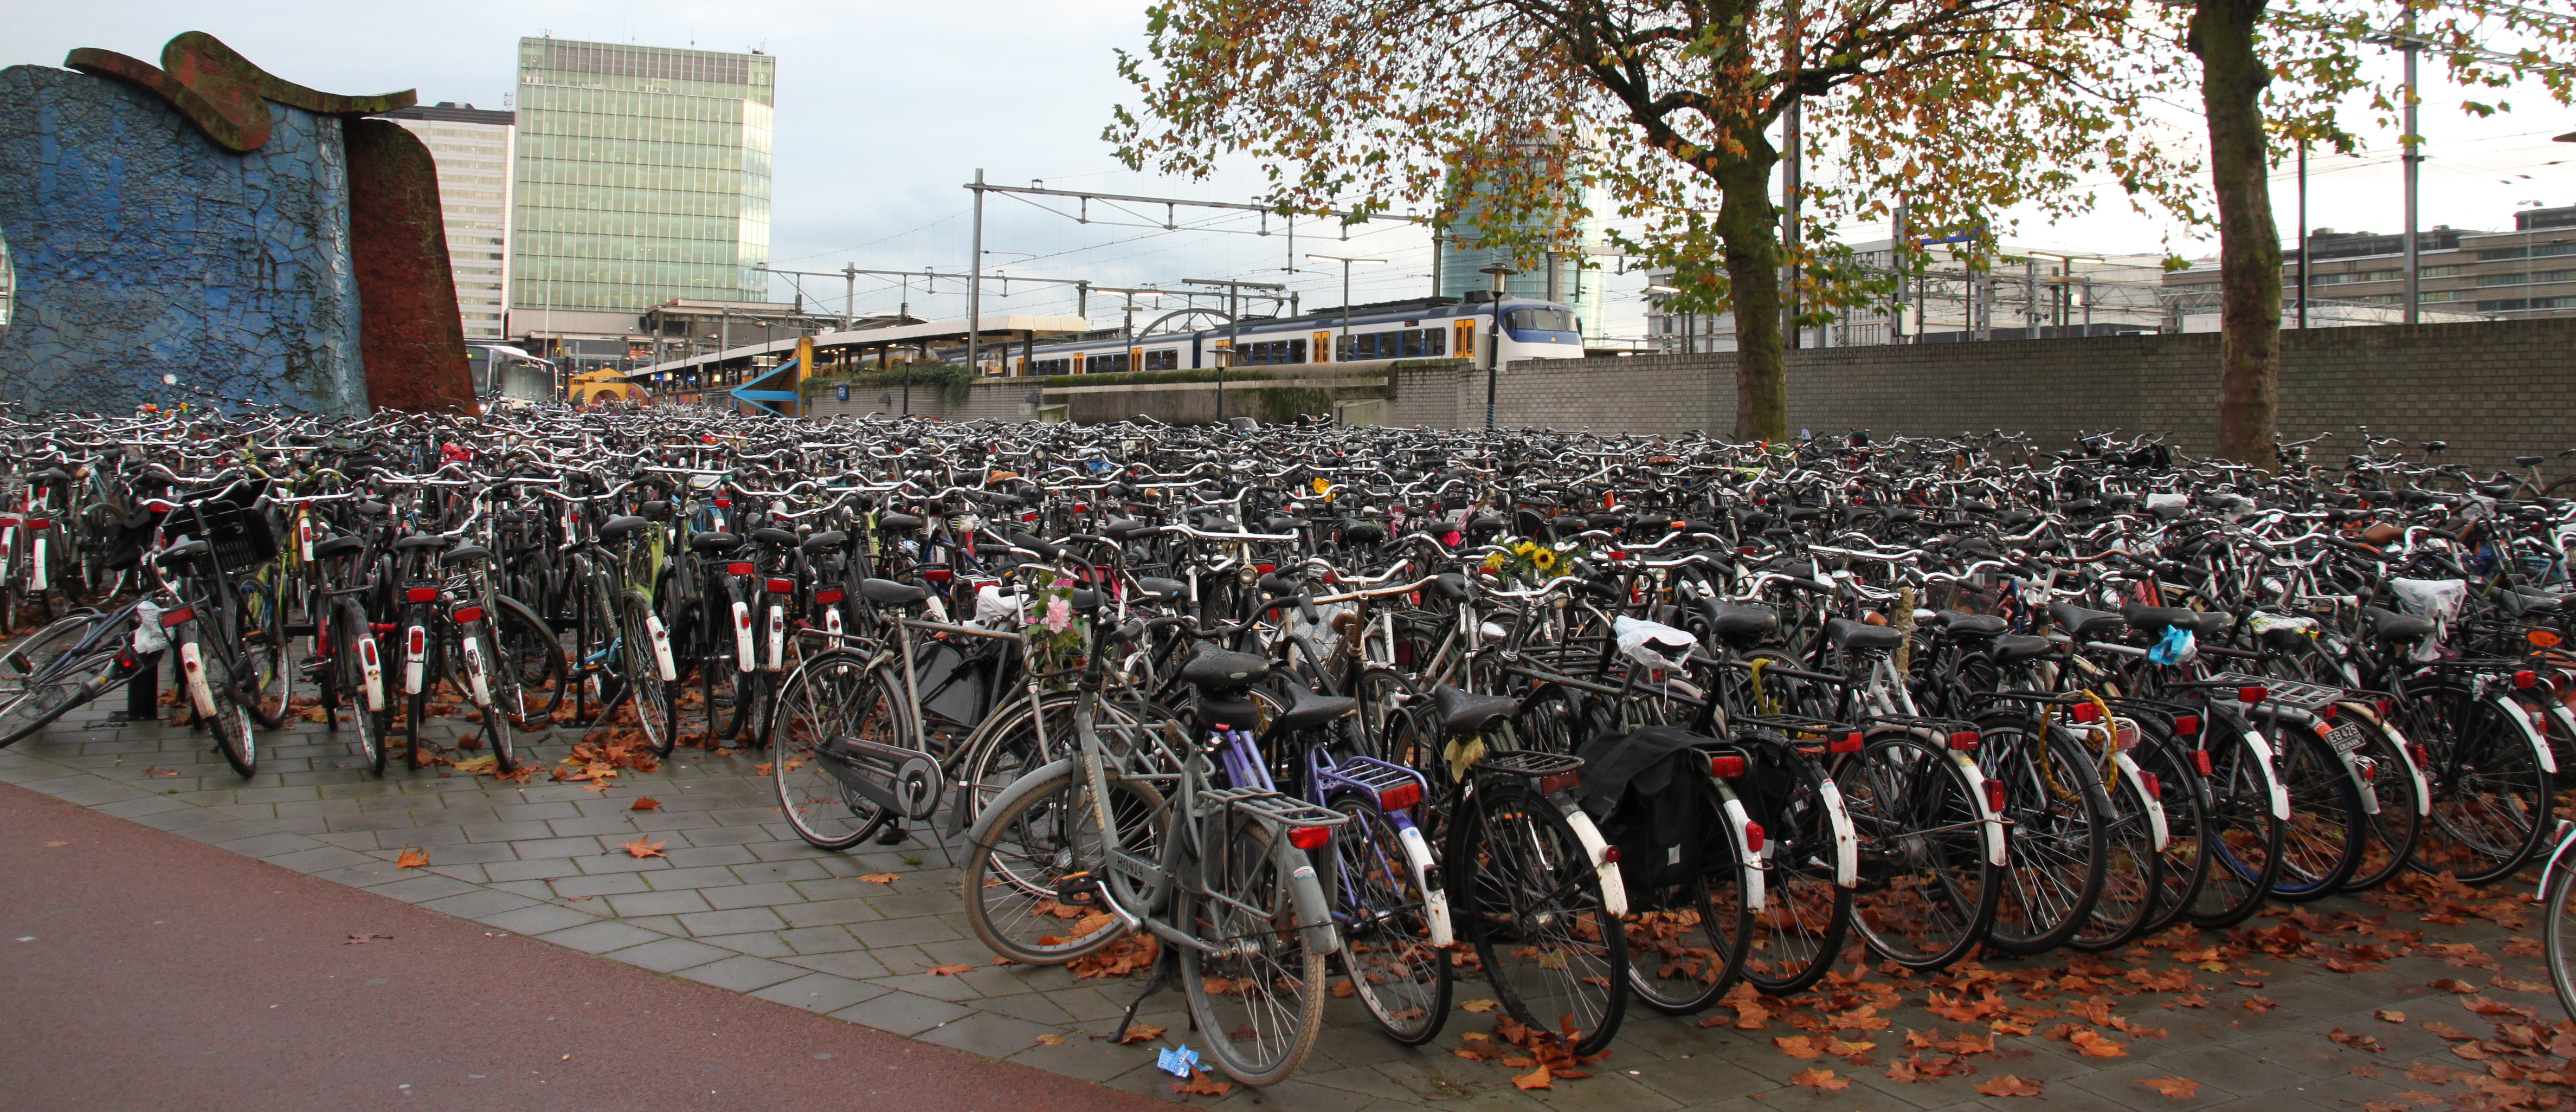 File:Fietsen Utrecht Centraal.jpg - Commons